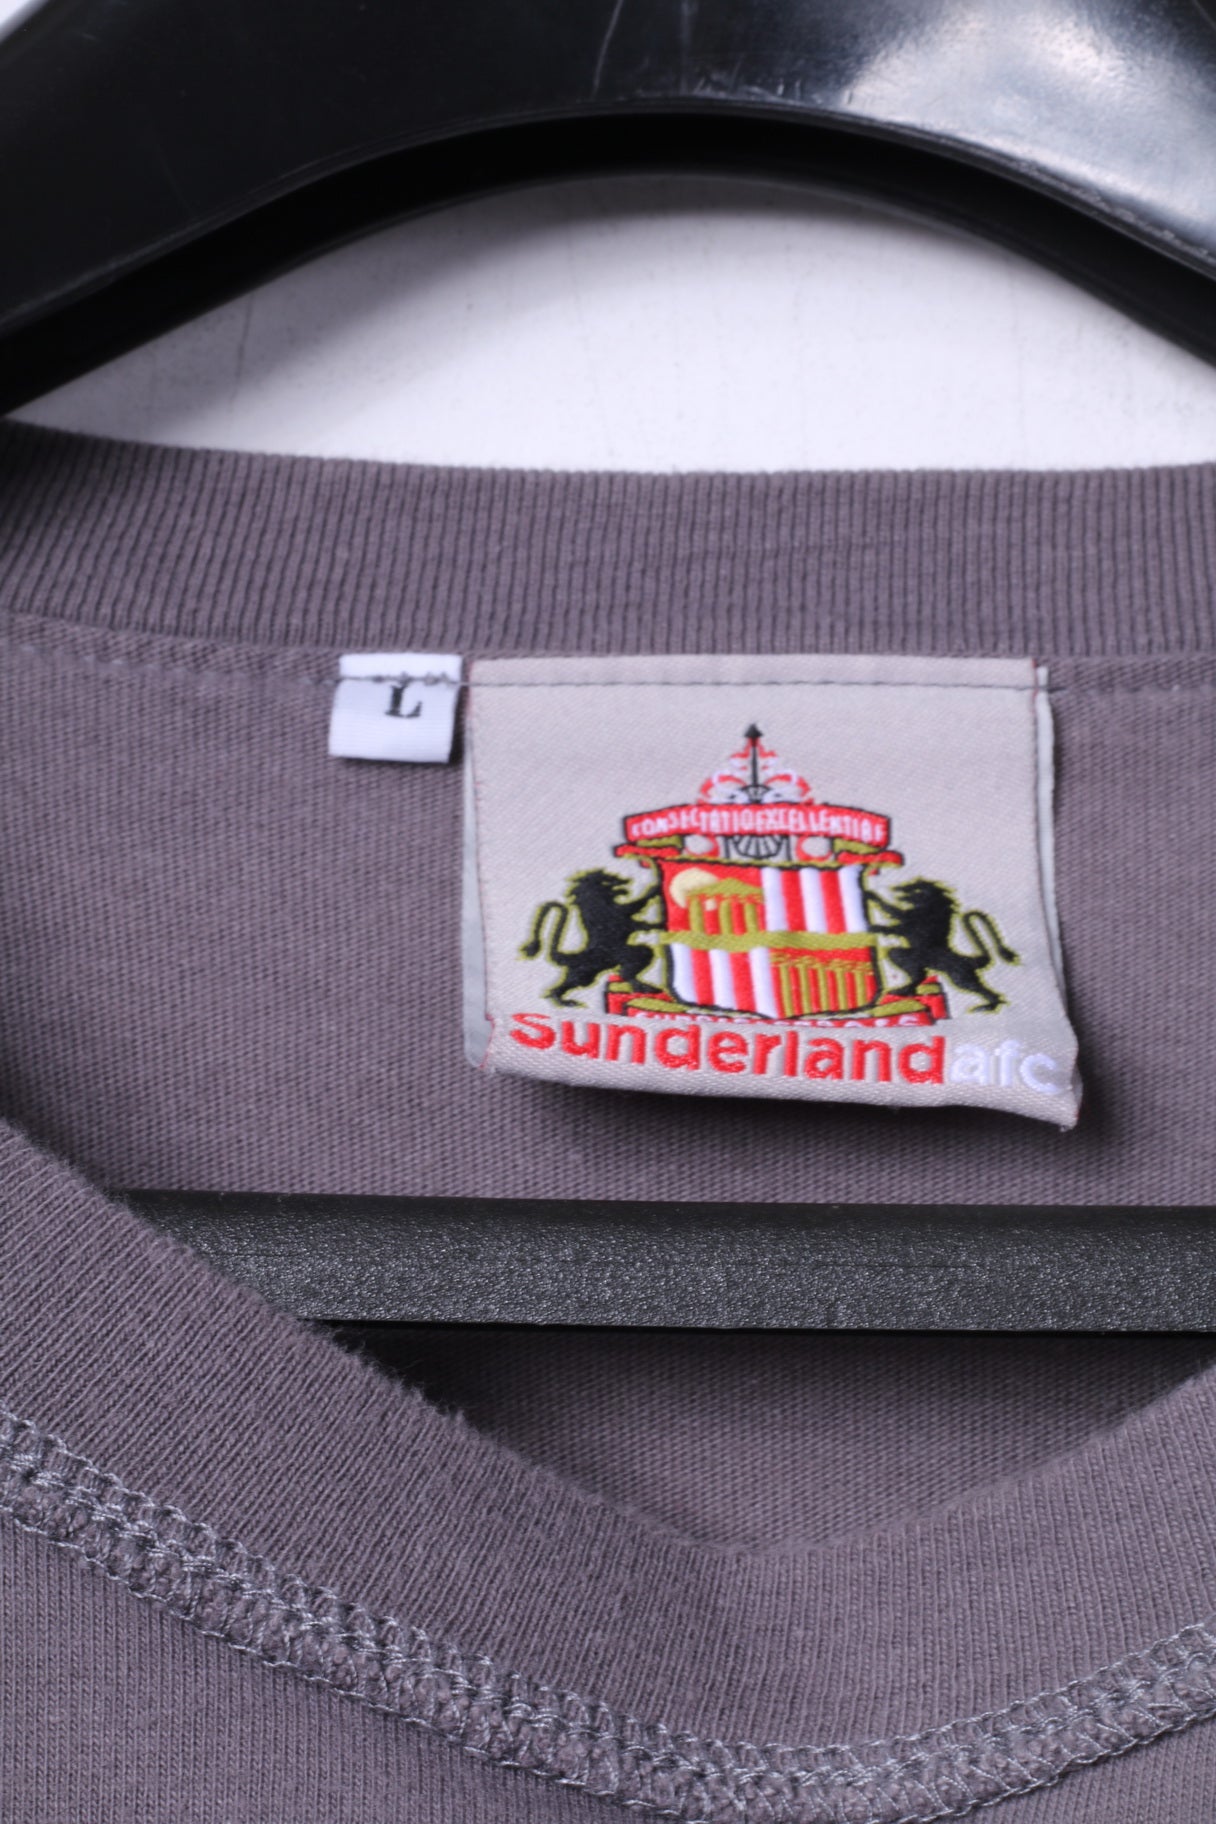 Sunderland AFC Mens L T-Shirt Grey Cotton Logo Football Club Top